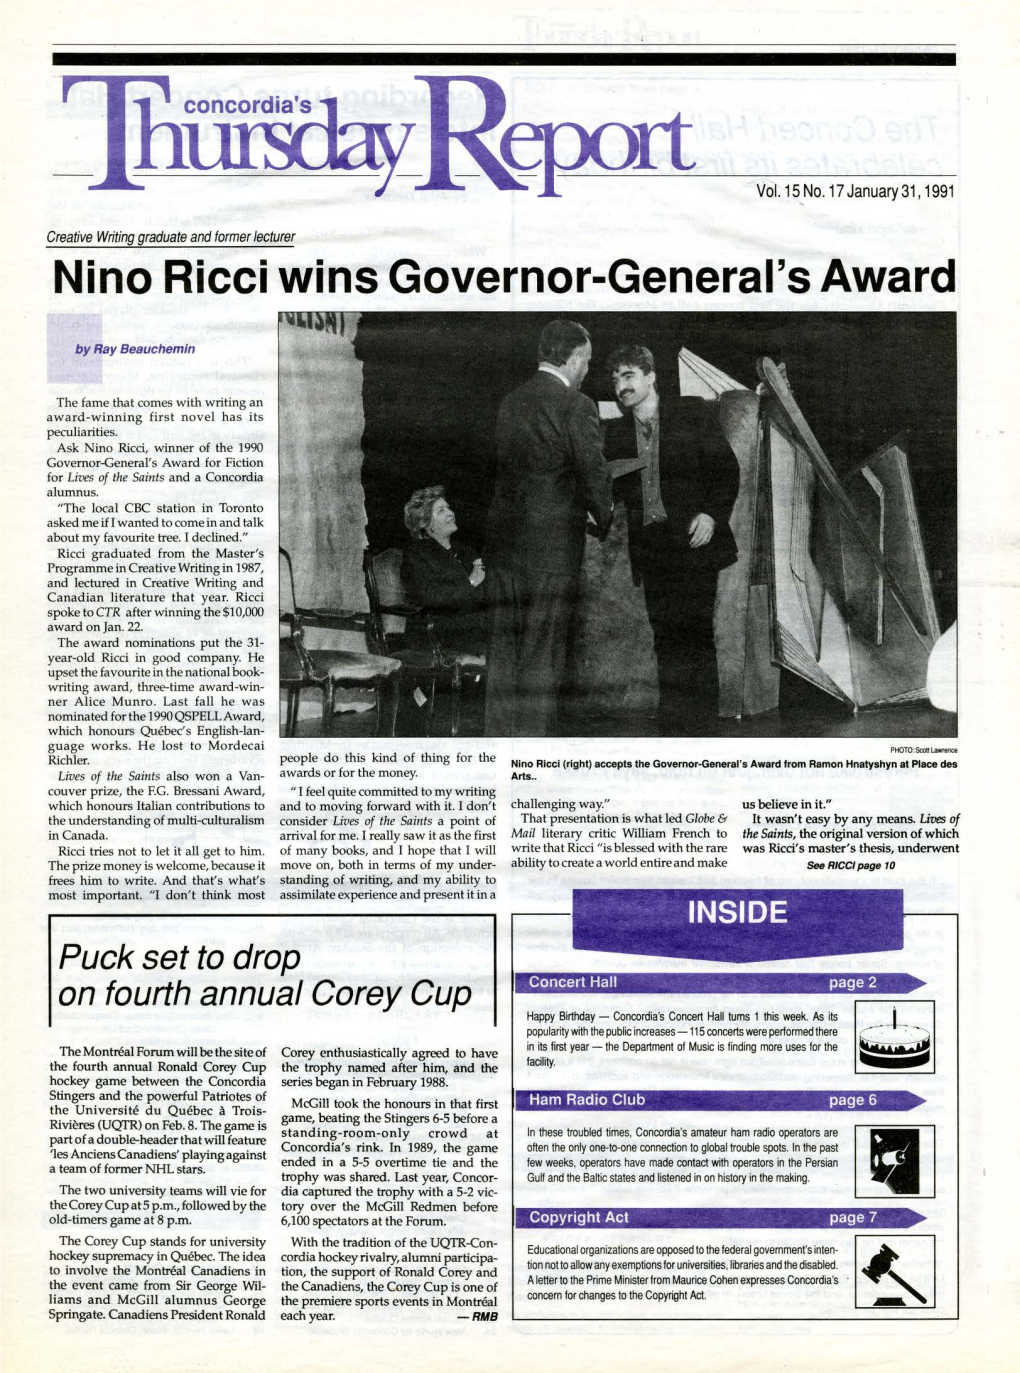 Nino Ricci Wins Governor-General's Award